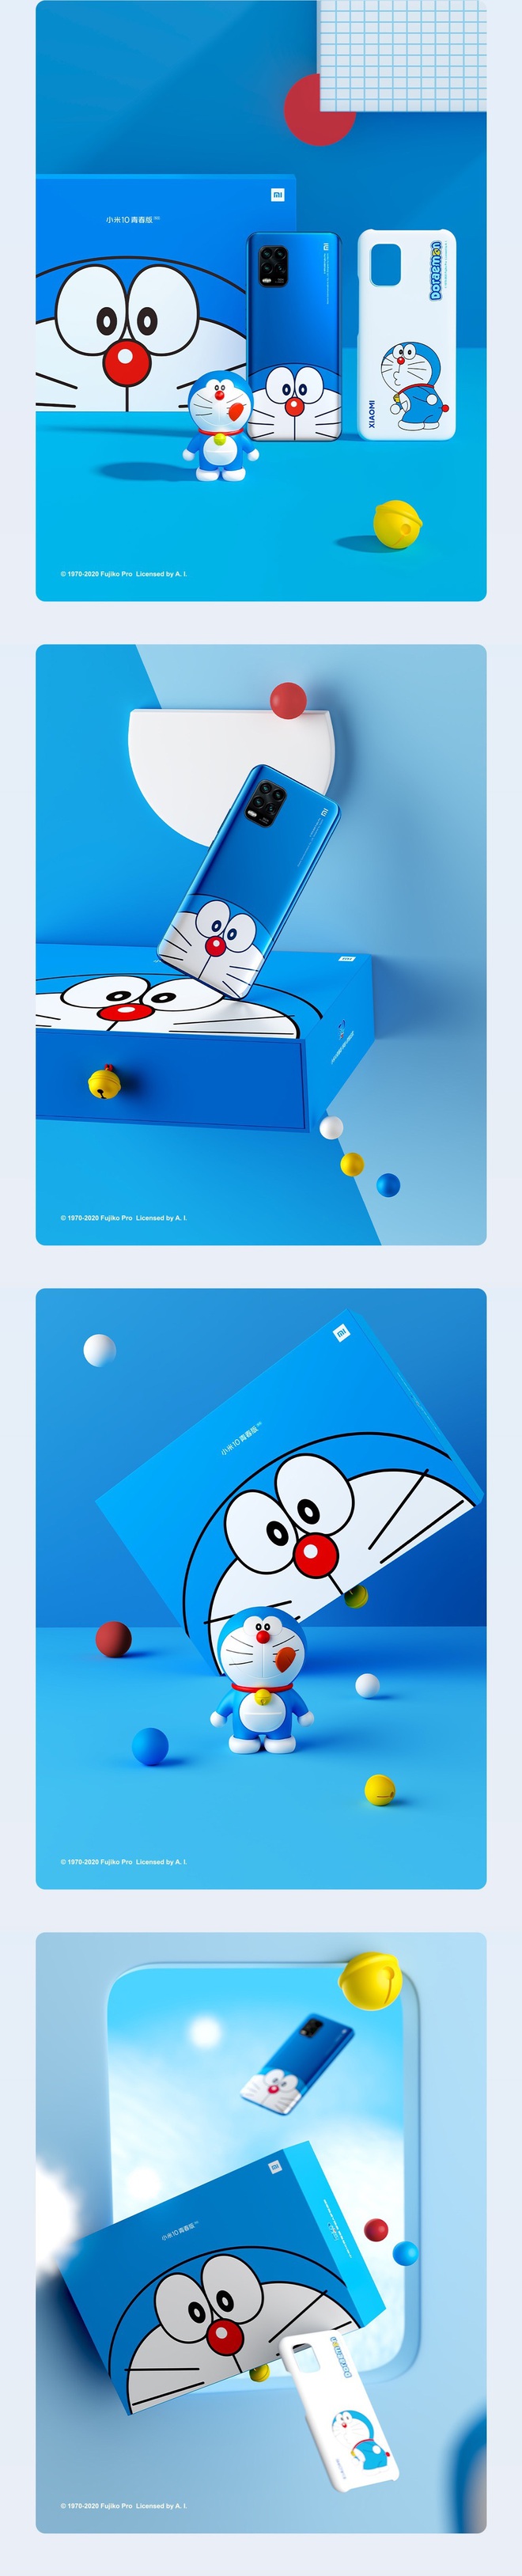 Xiaomi ra mắt smartphone kỷ niệm 50 năm Doraemon - Ảnh 2.